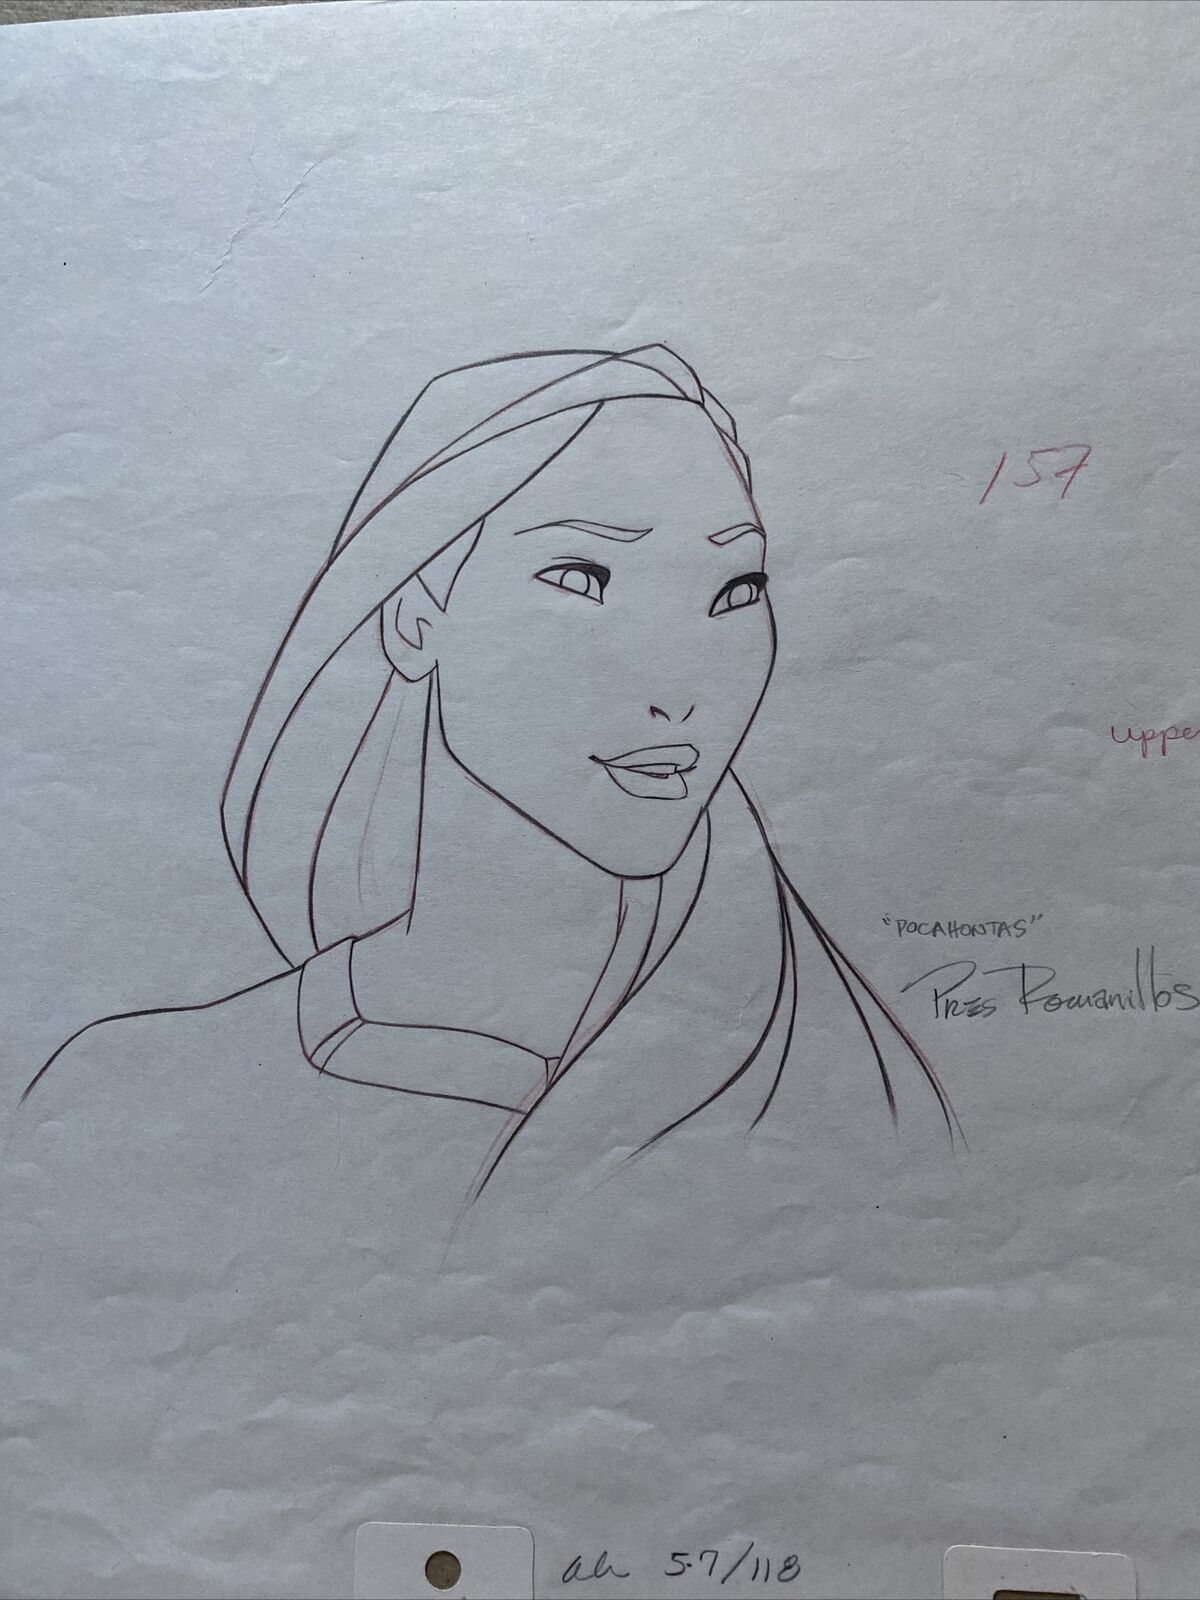 Original Pocahontus Sketch From Disney Animator Pres Romanillos